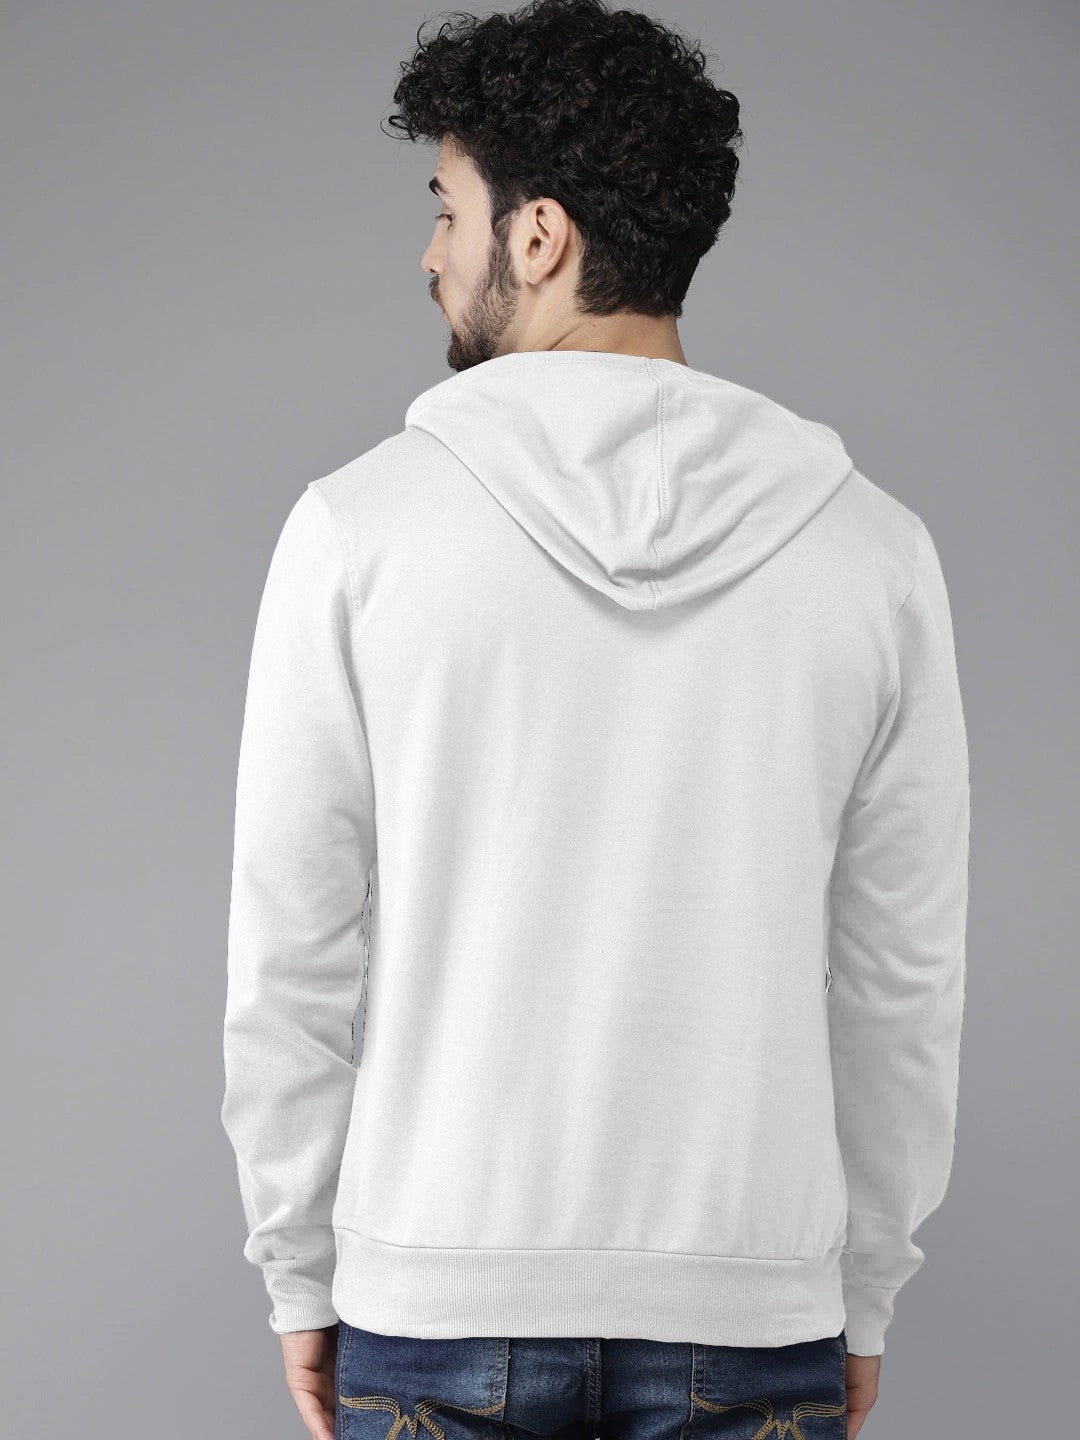 White Colour High Quality Premium Hoodie For Men